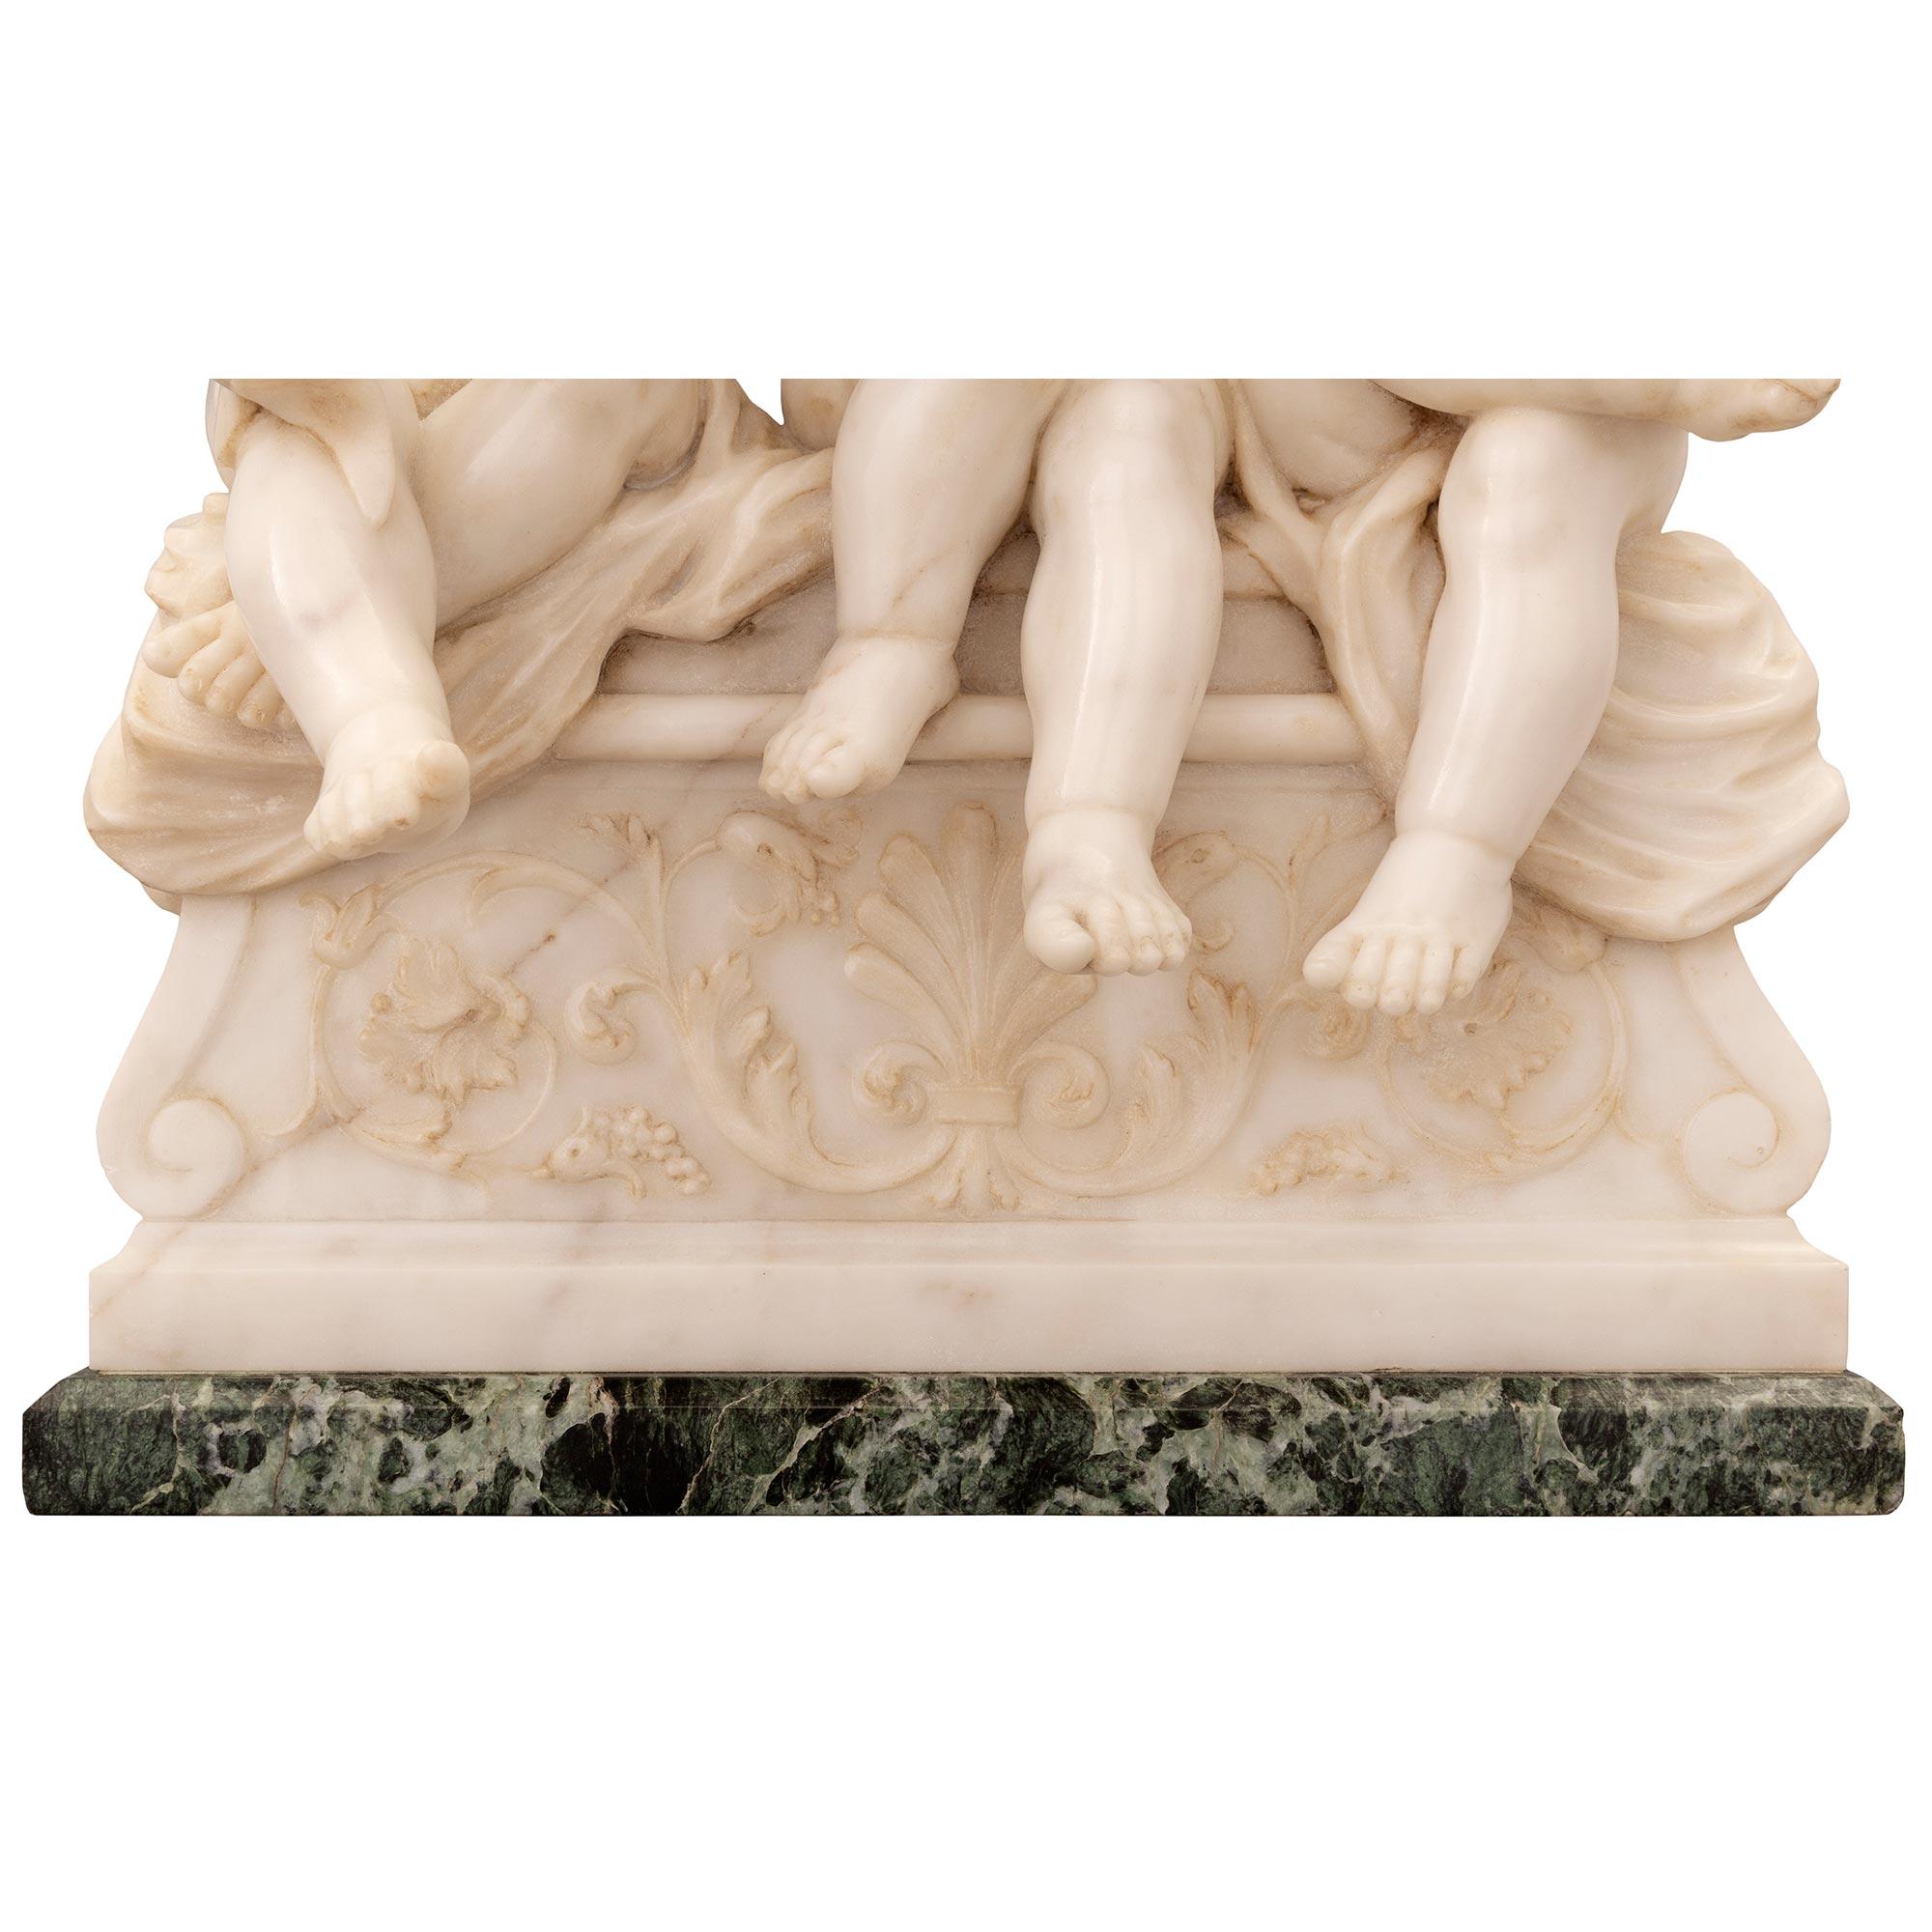 Italian 19th Century Verde Antico and White Carrara Marble Statue For Sale 5